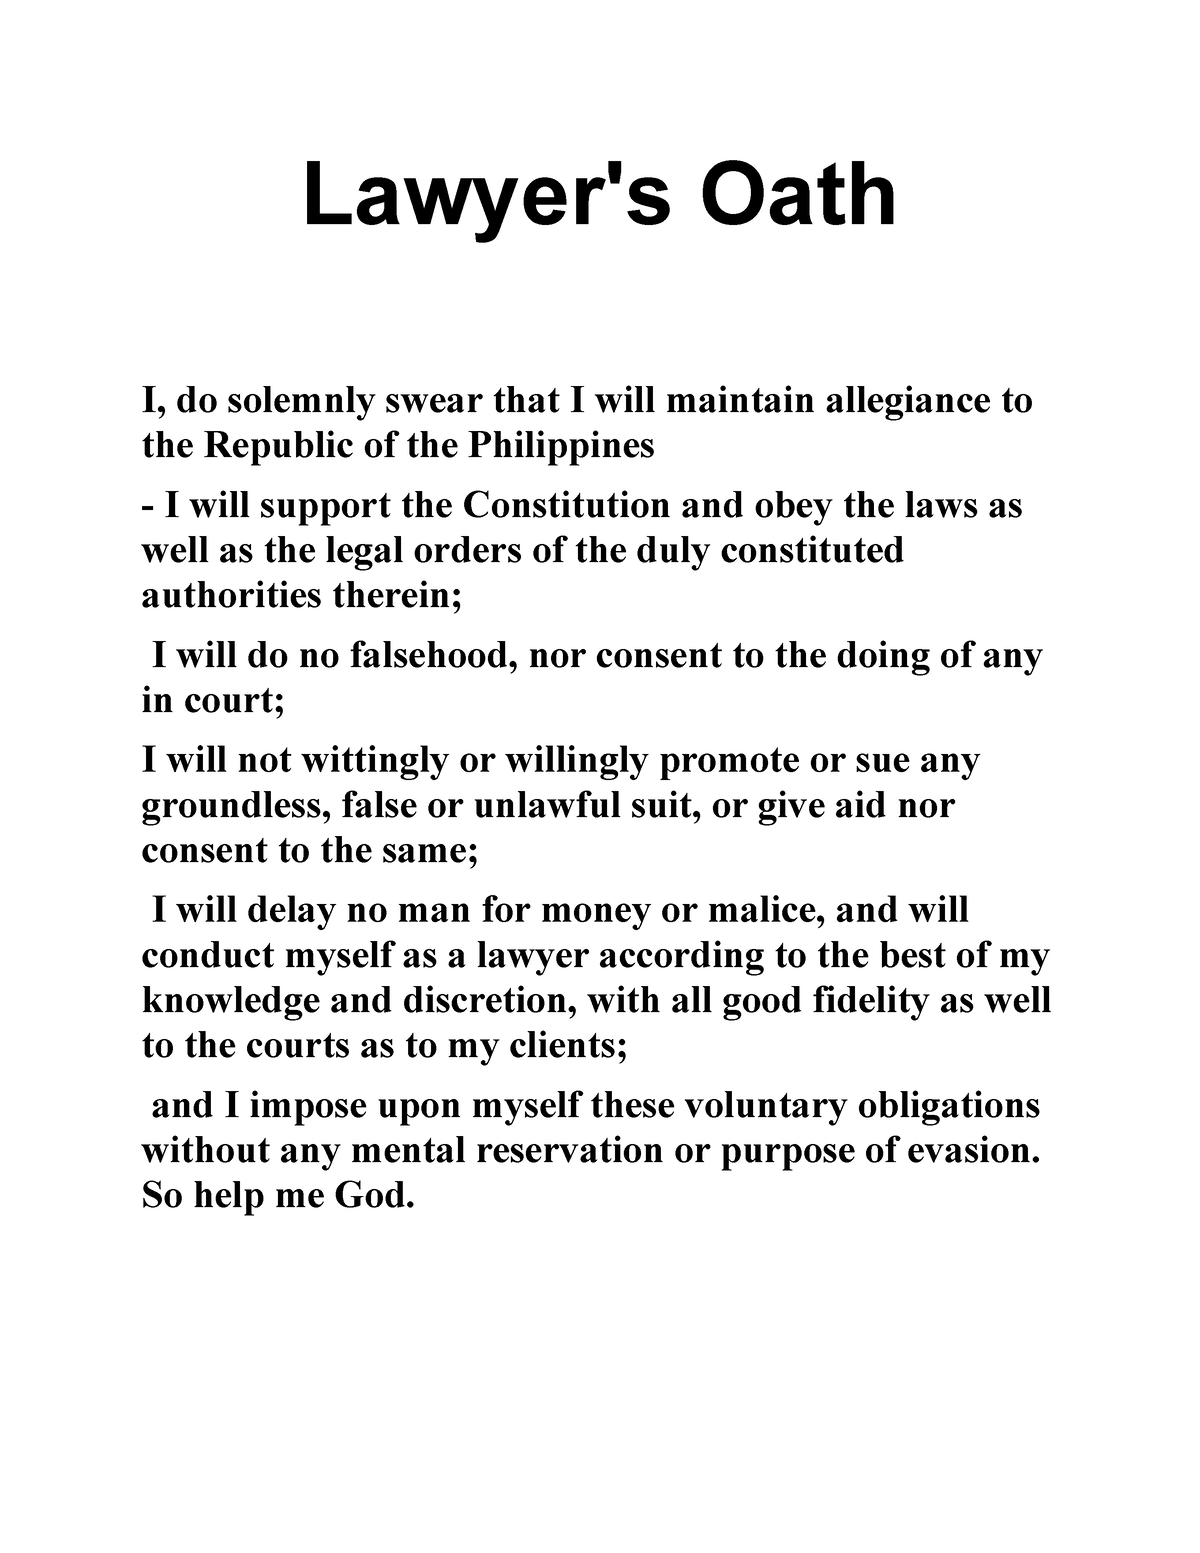 lawyer-oath-lawyer-s-oath-i-do-solemnly-swear-that-i-will-maintain